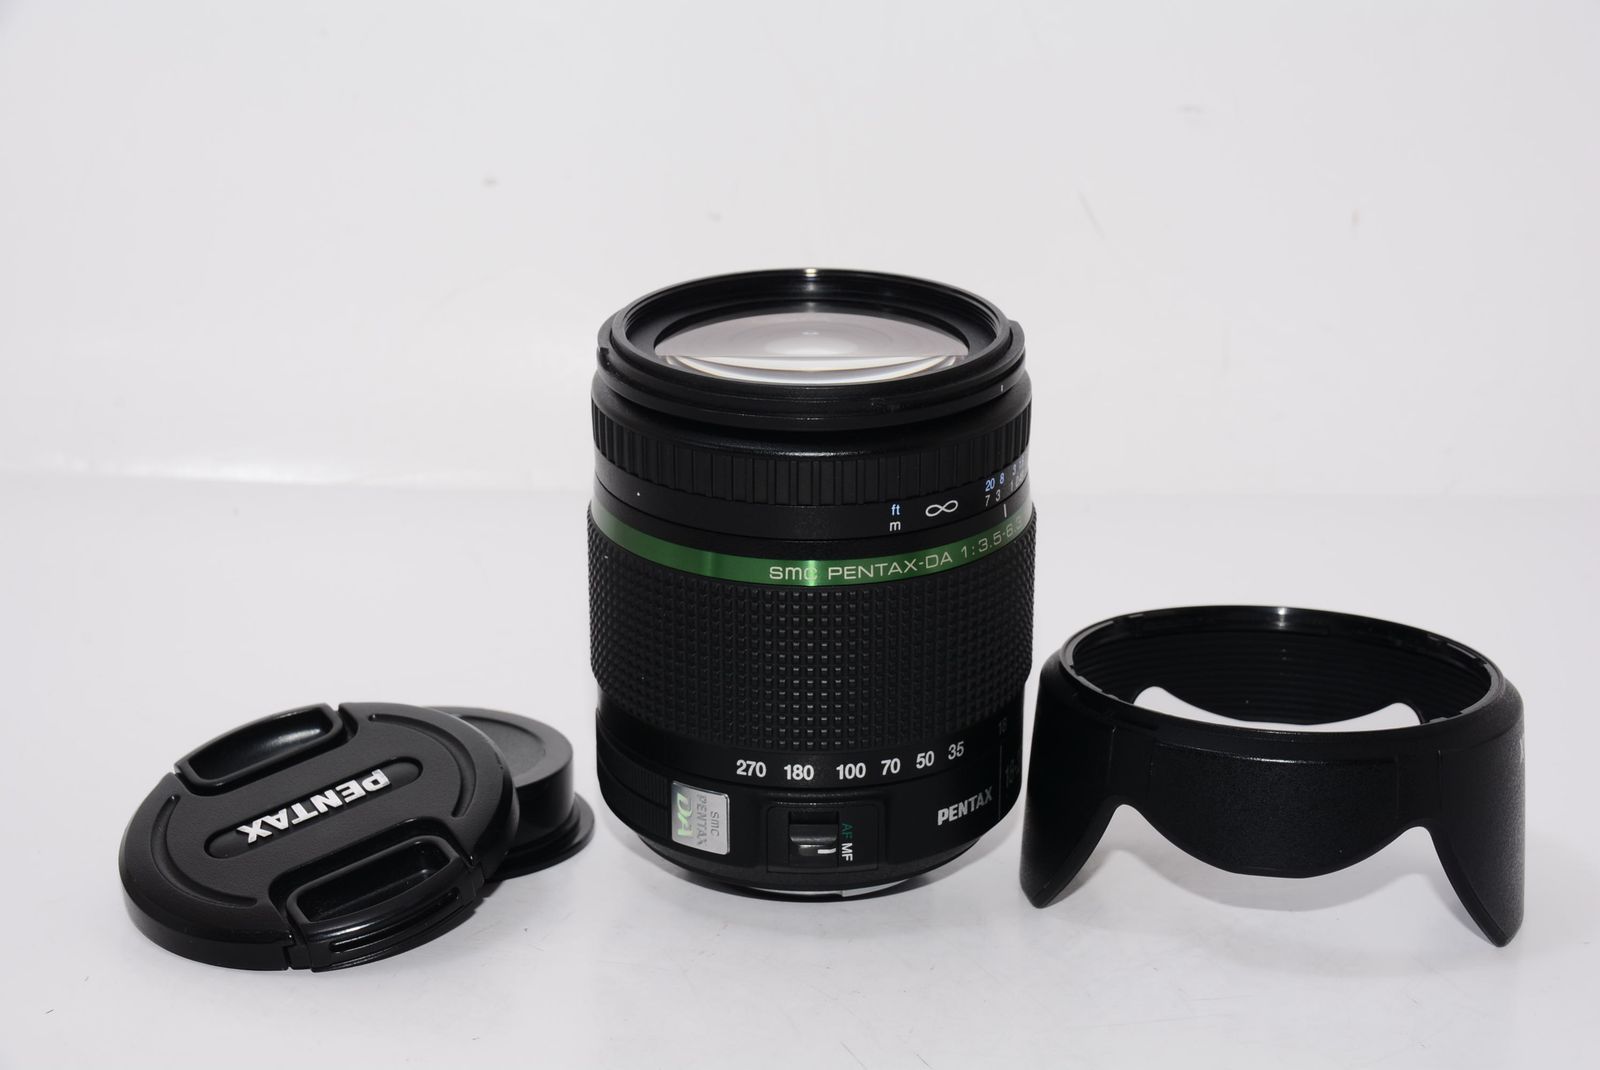 PENTAX DA18-270mmF3.5-6.3ED SDM Kマウント - 百獣の買取王カメラ